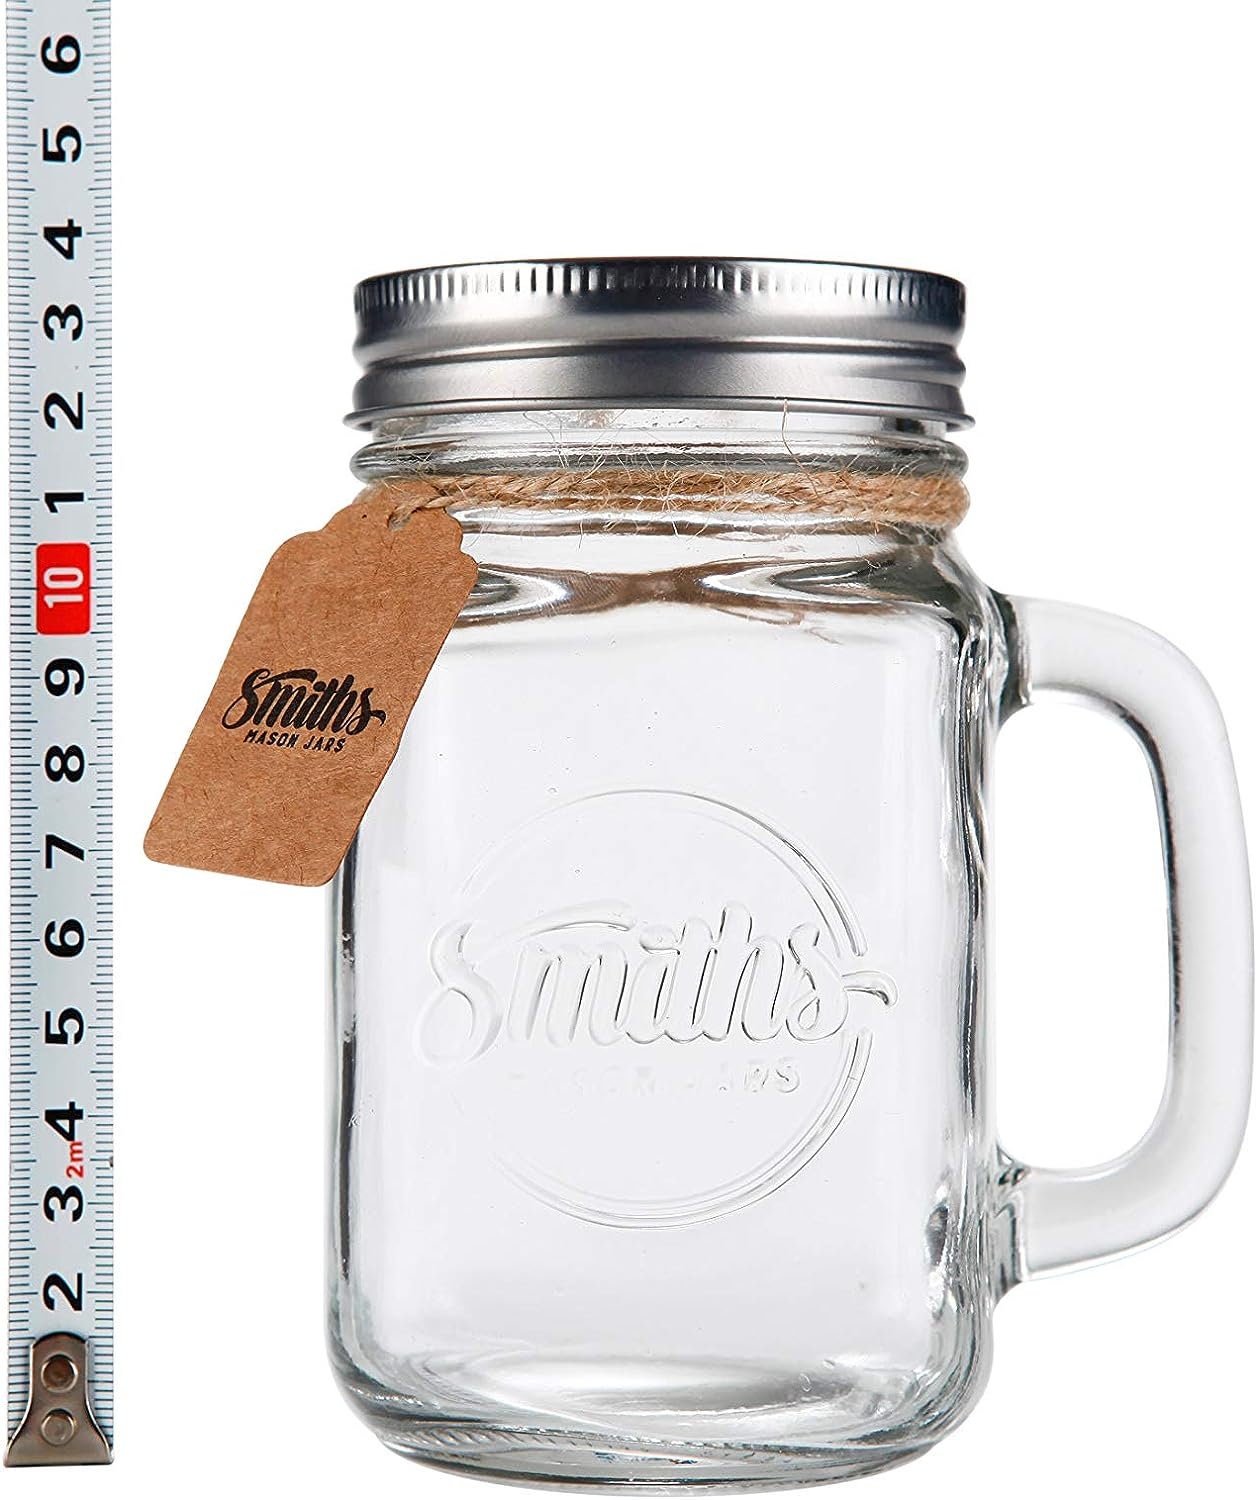 Smiths Mason Jars 6 Packs 16oz (473ml) Glass Jars with Handles